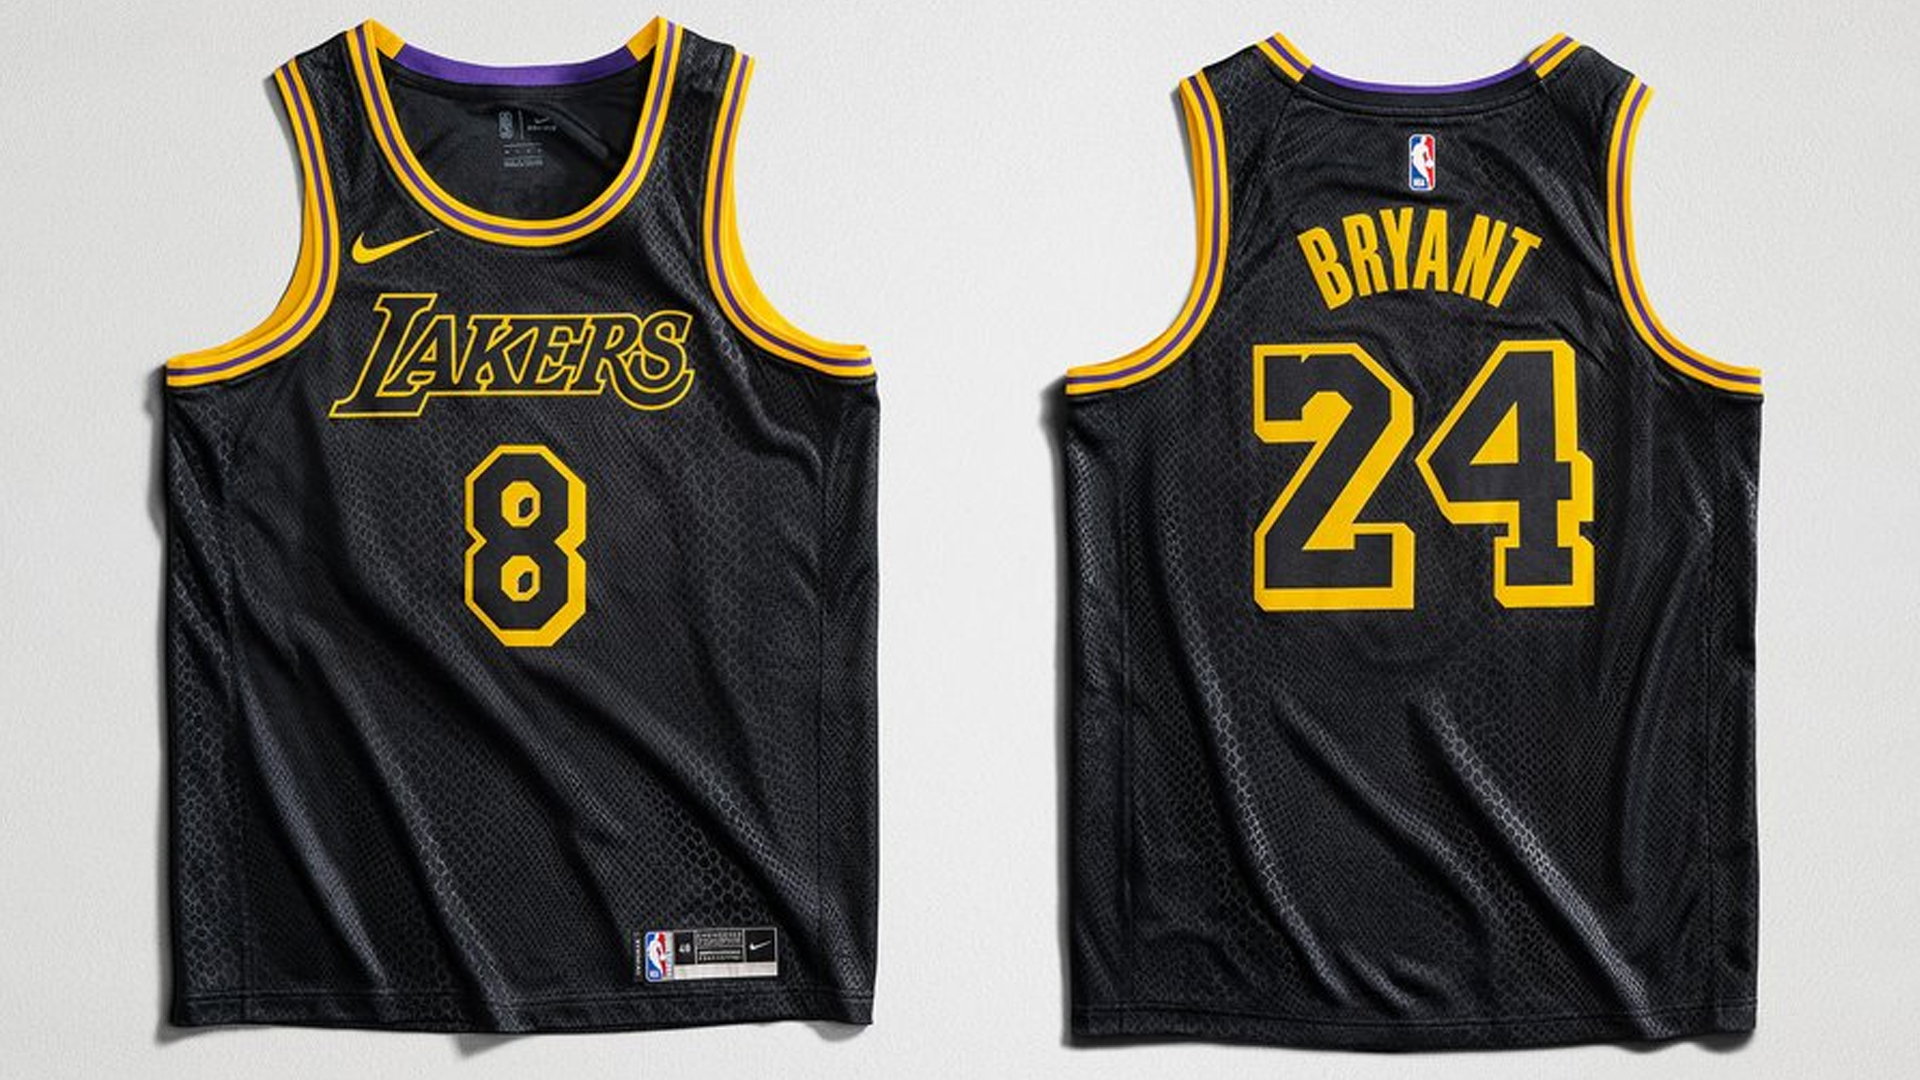 https://redac.trashtalk.co/wp-content/uploads/2020/08/Black-Mamba-maillot-Lakers-18-aout-2020.jpg